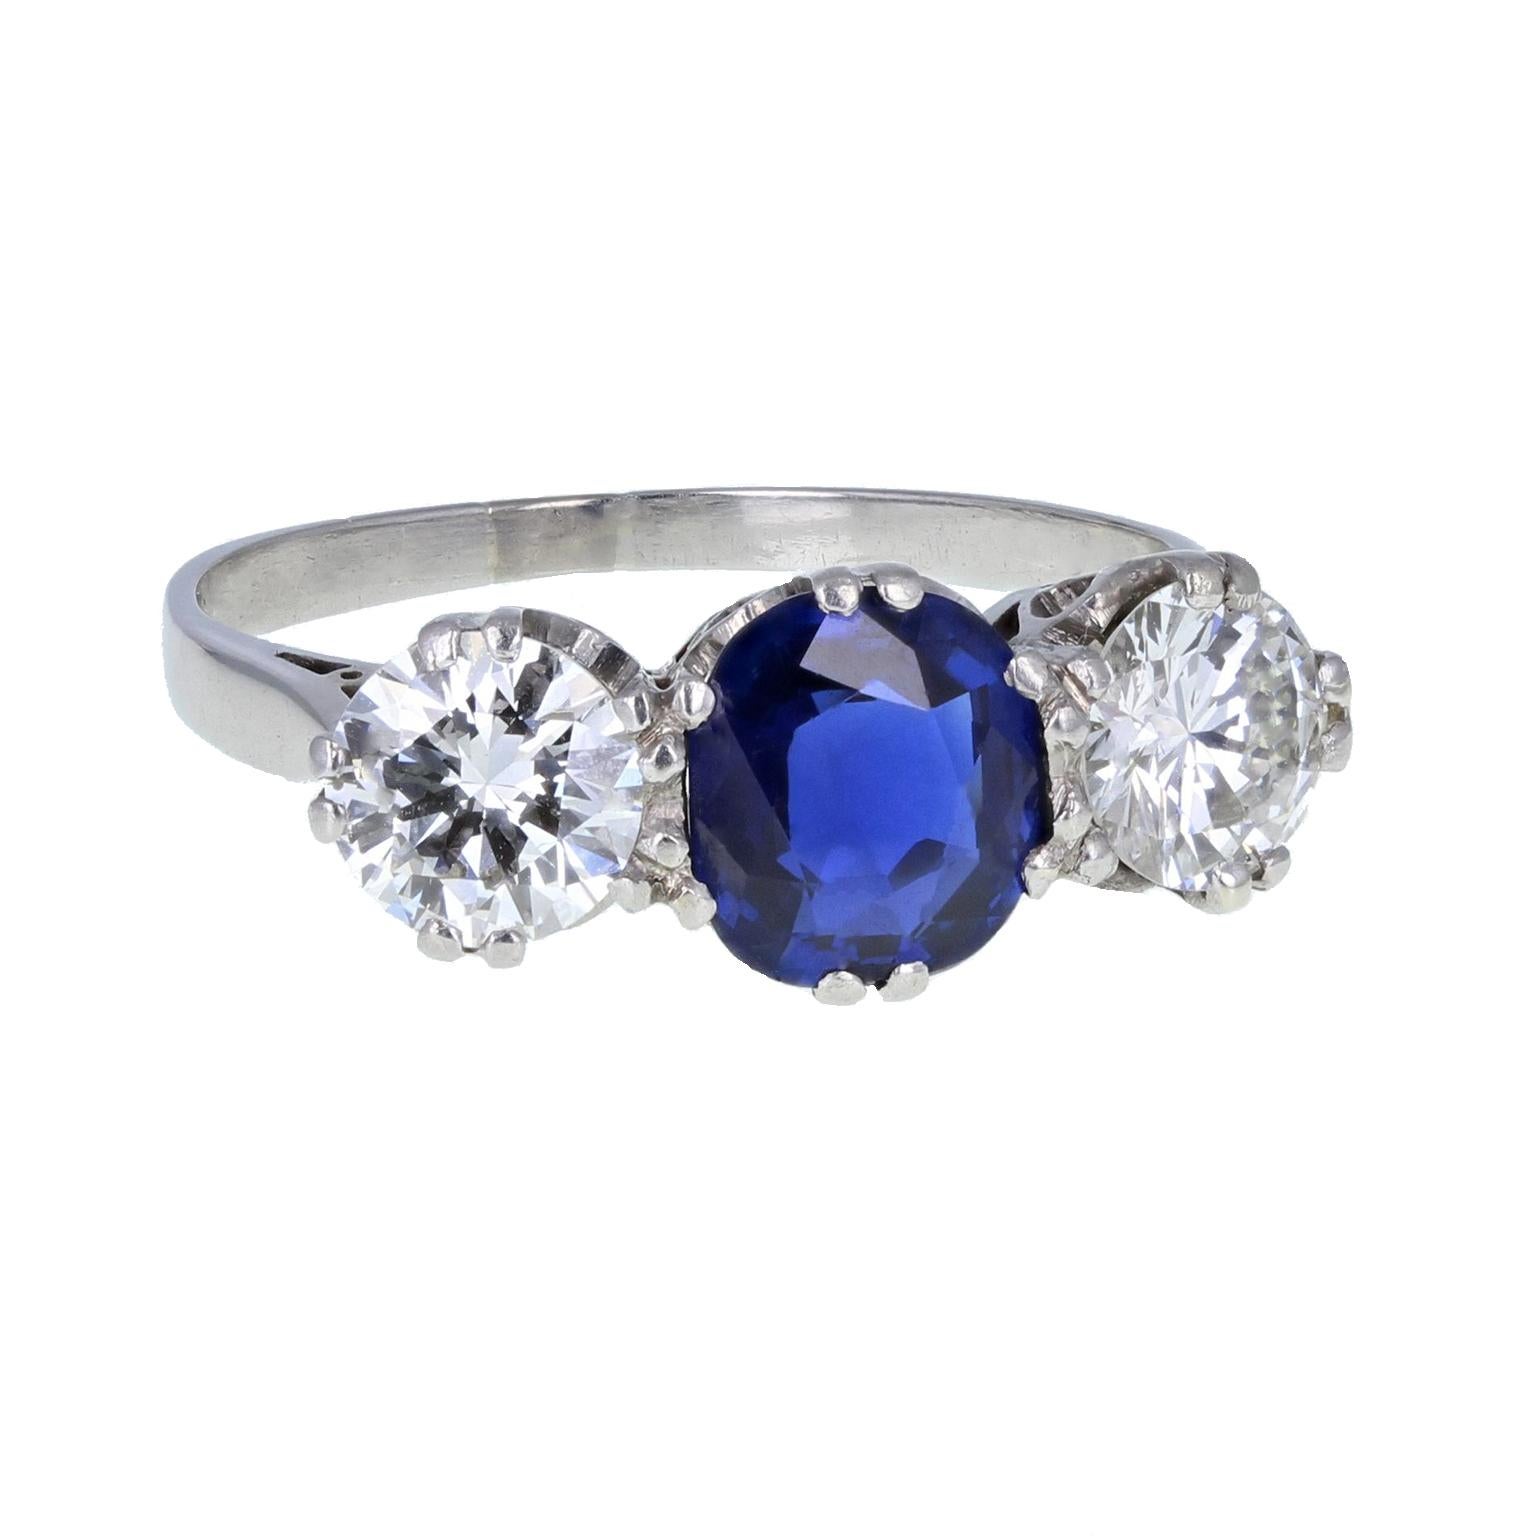 1930s sapphire and diamond ring